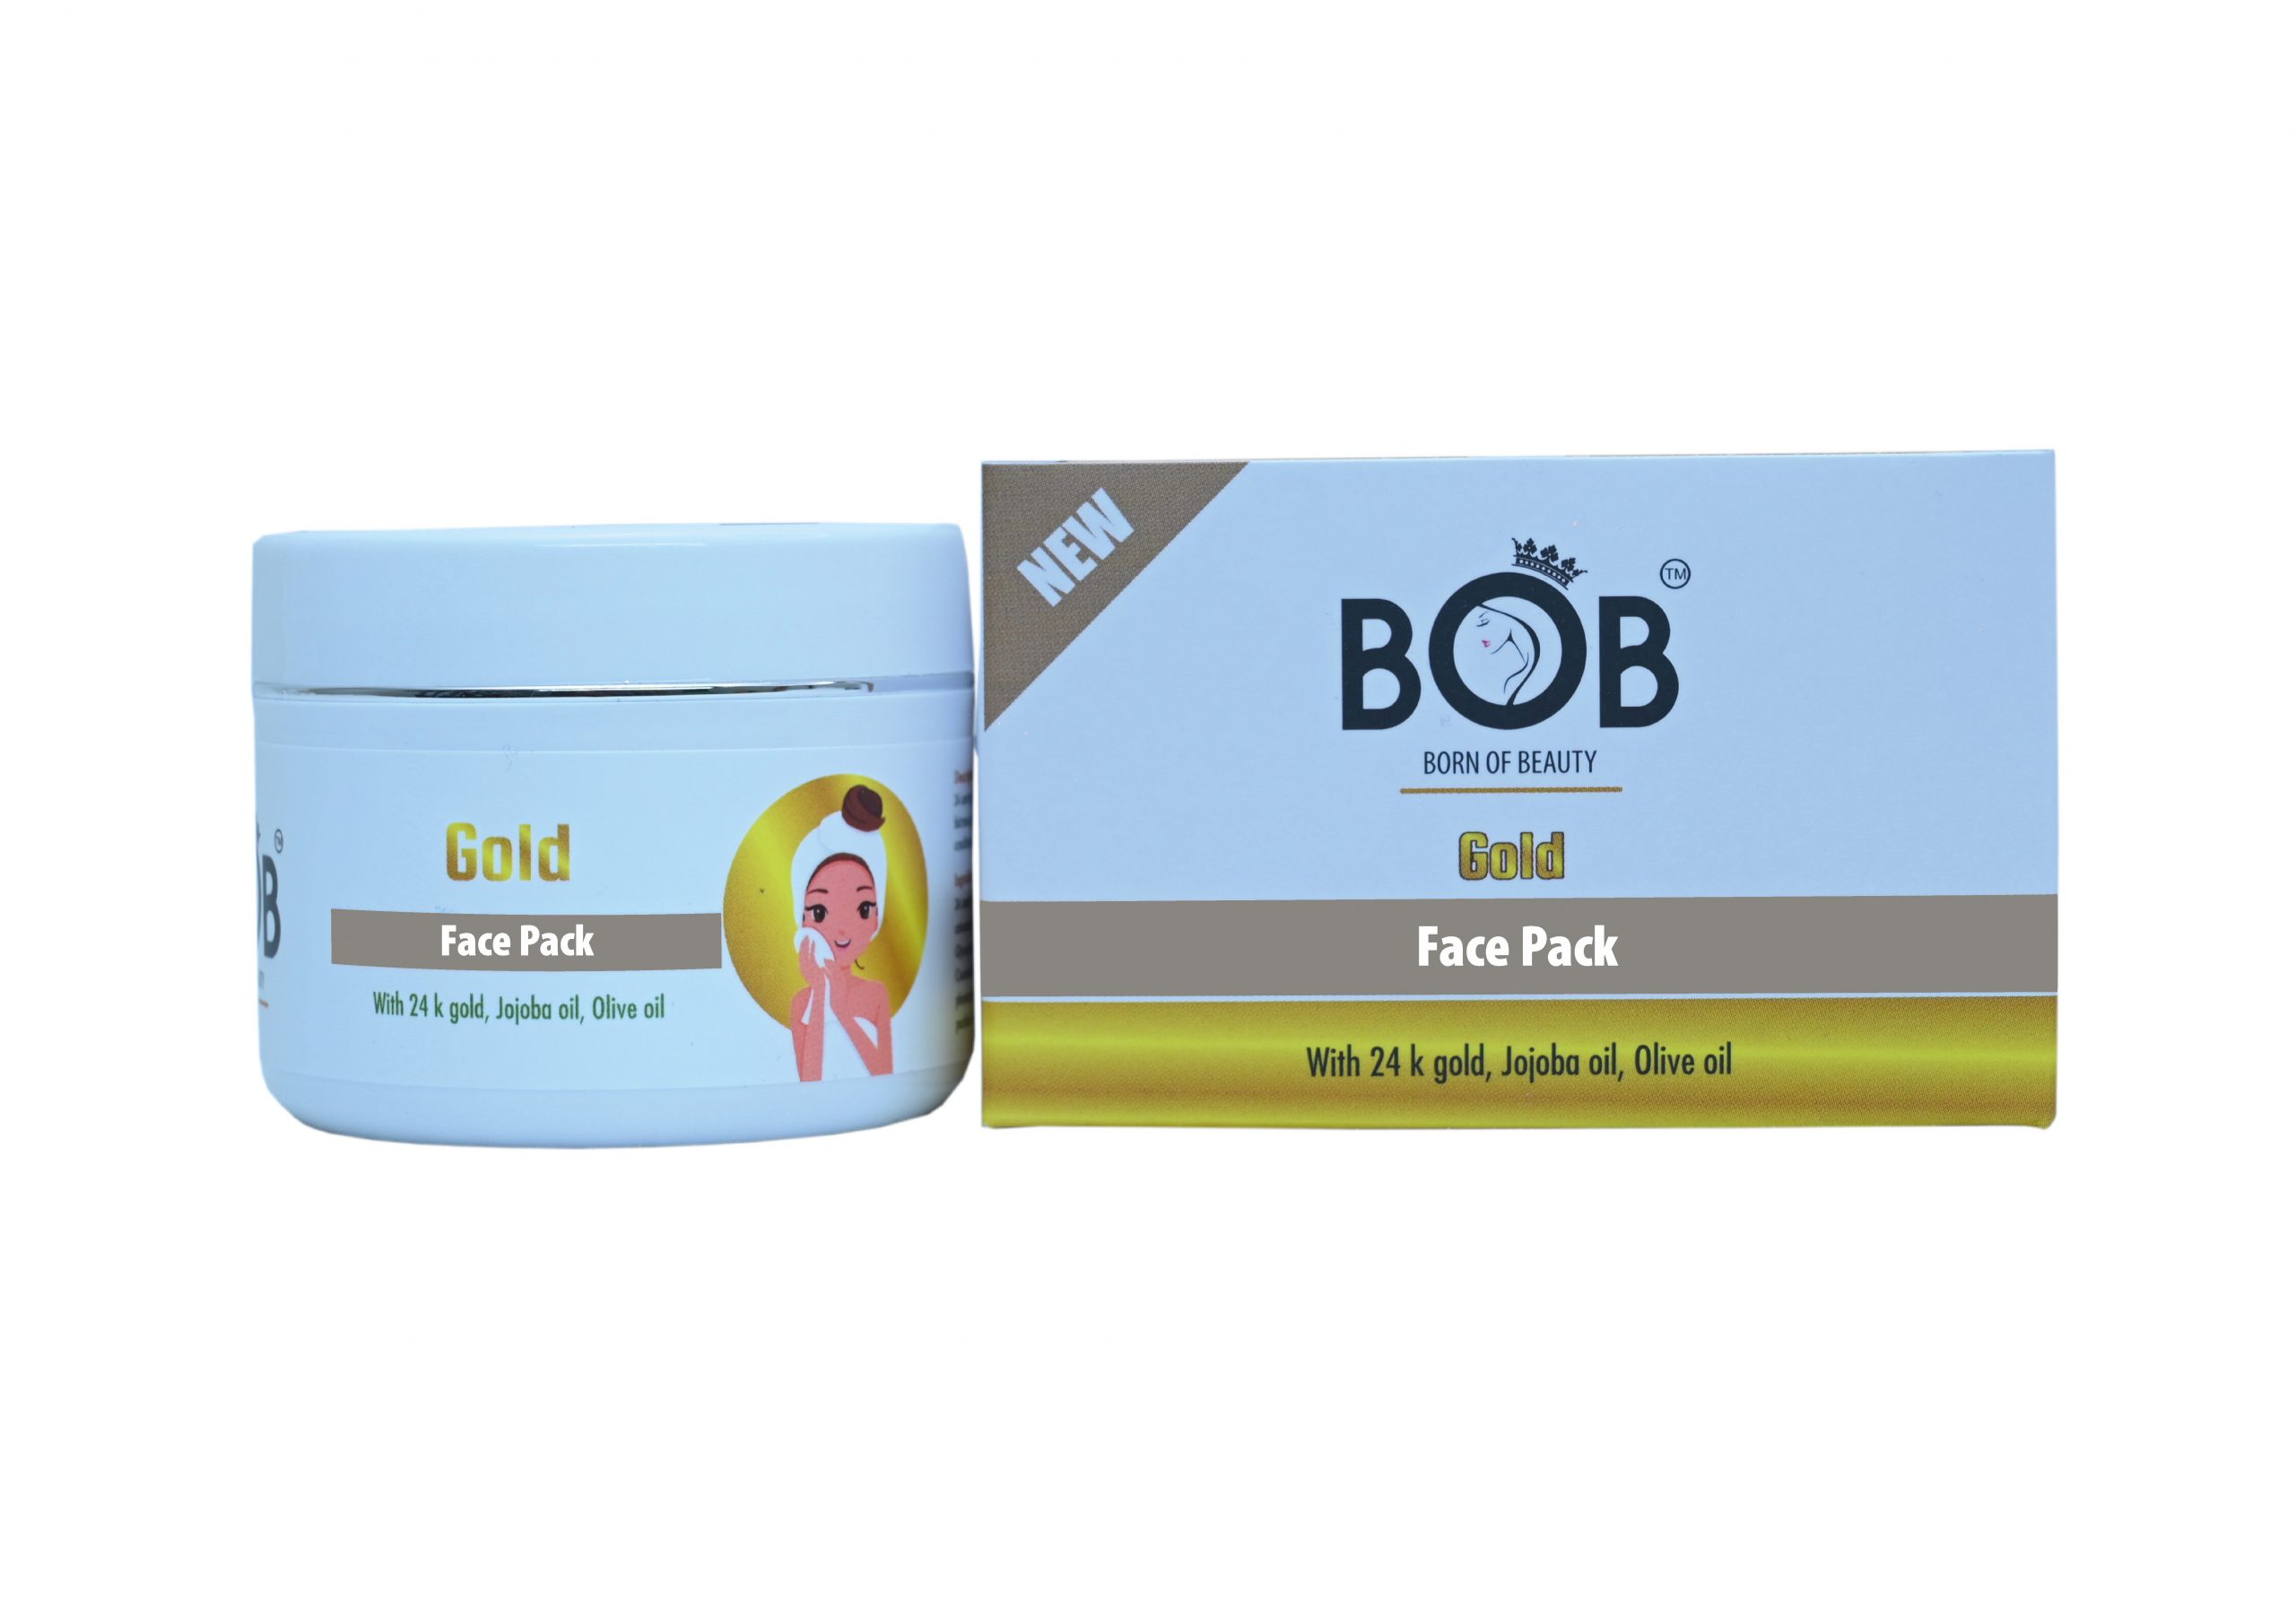 BOB Gold Face Pack With 24 k Gold, Jojoba Oil, Olive Oil